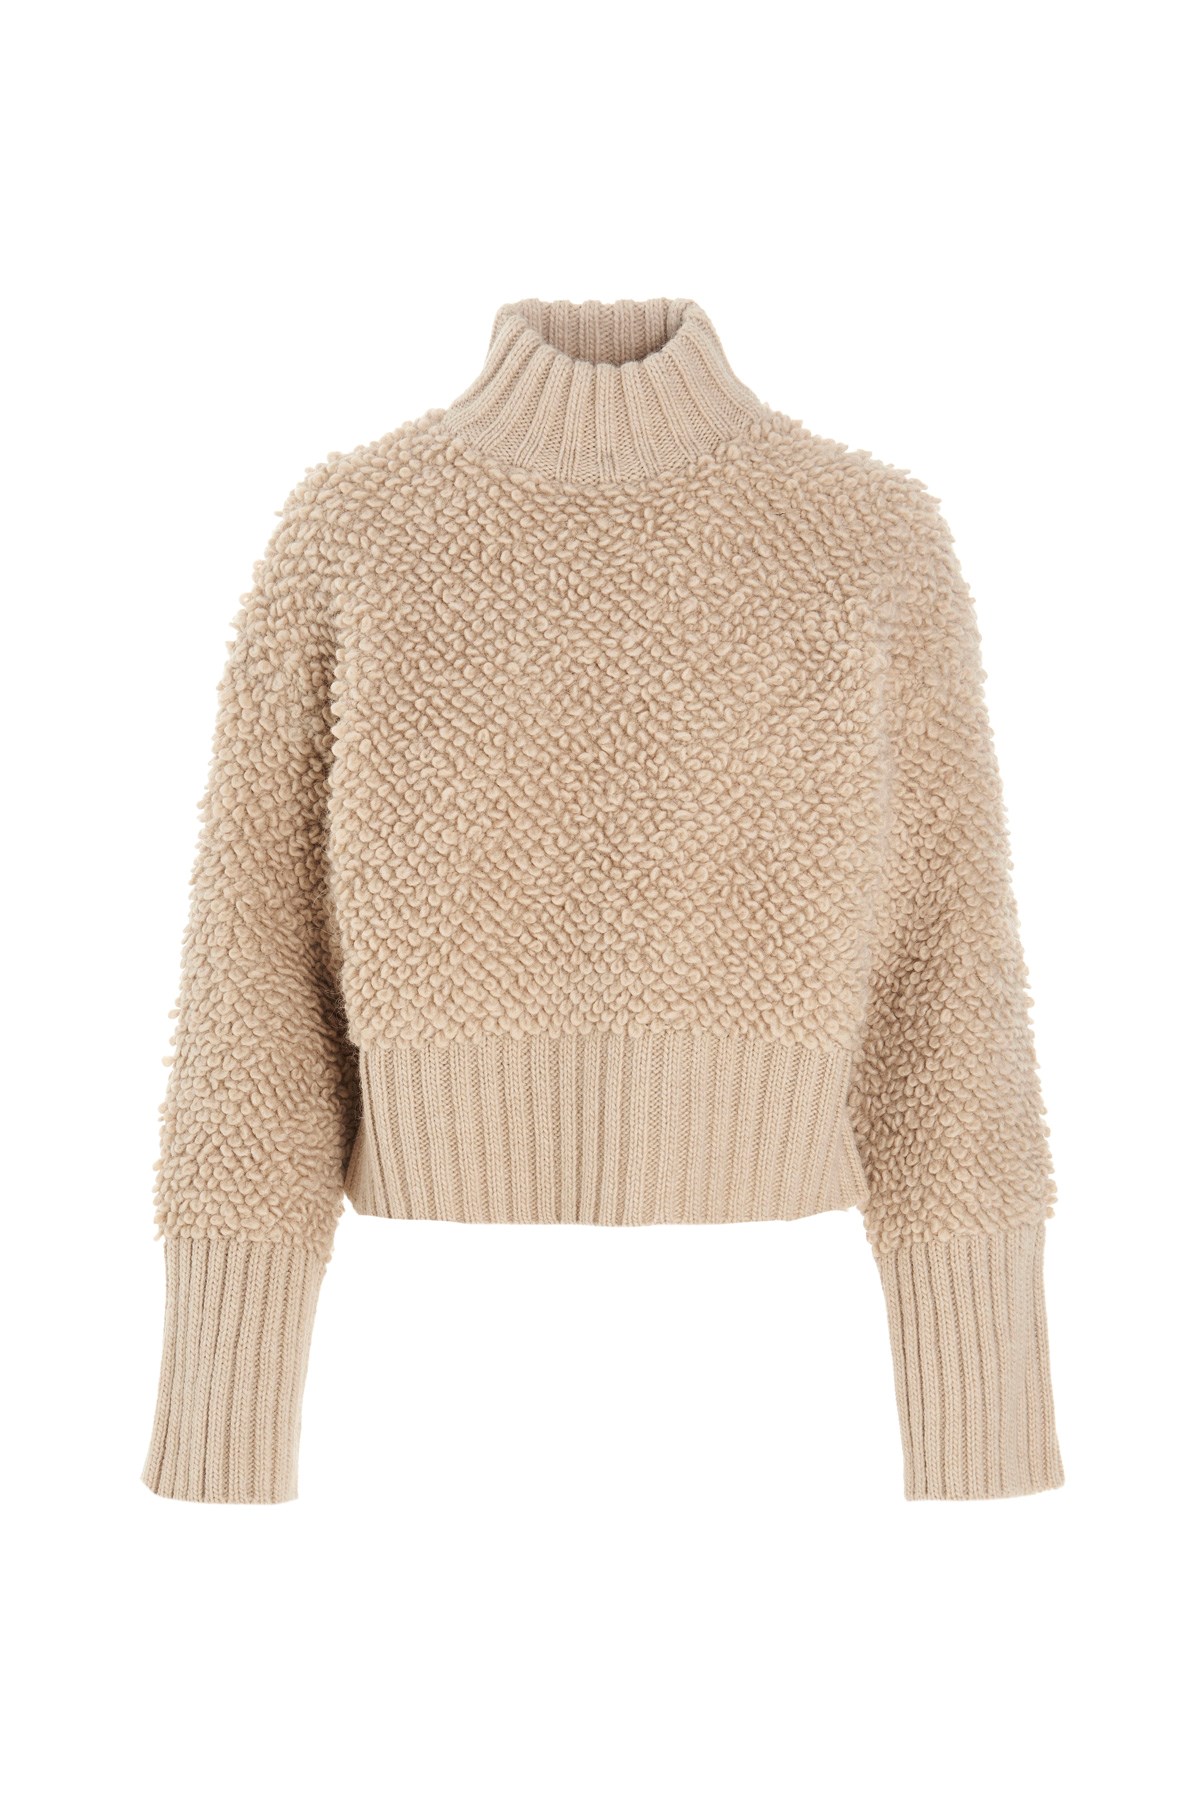 THE ATTICO Wool Turtleneck Sweater